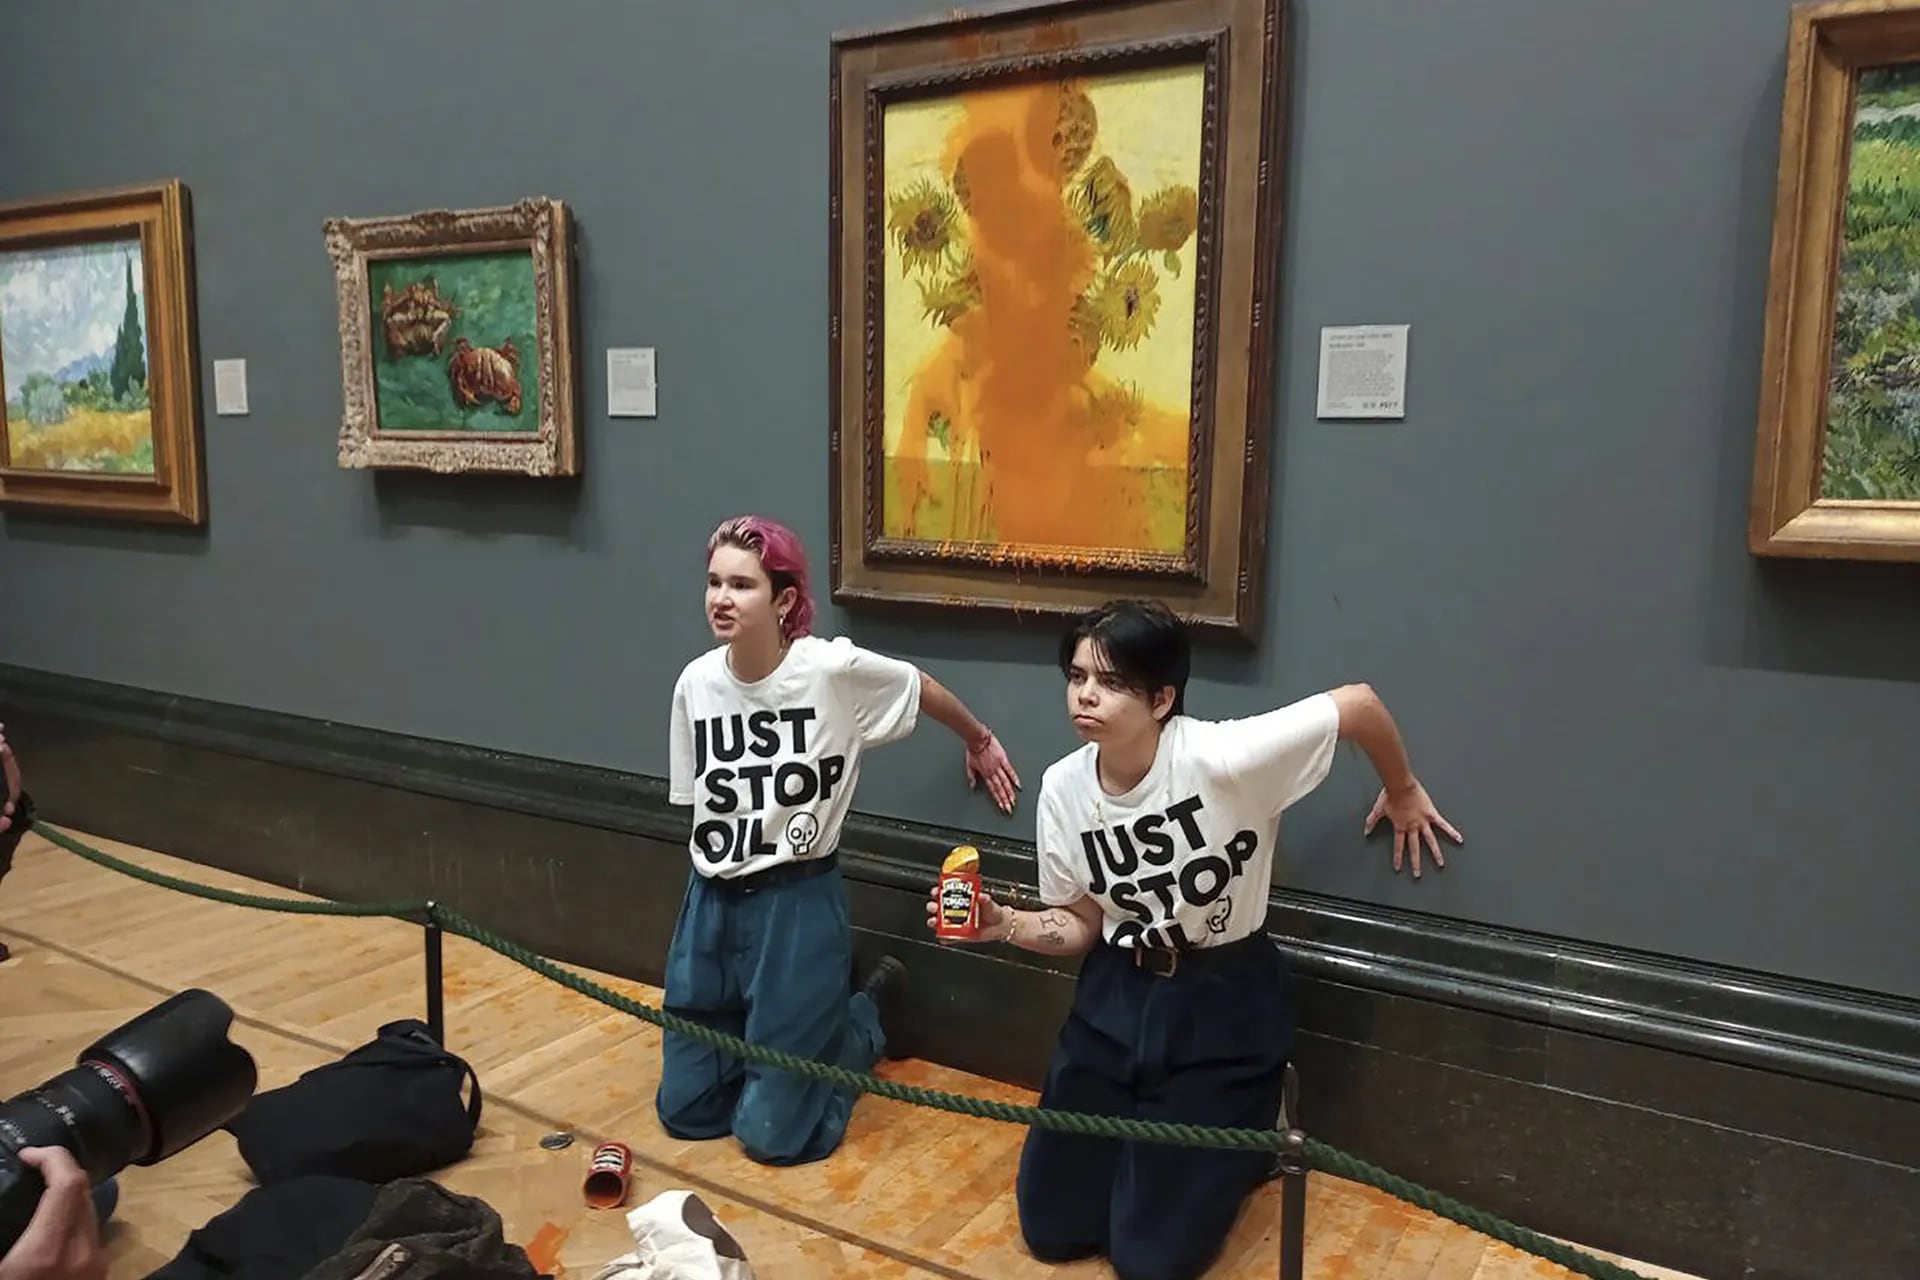 Dos manifestantes arrojan sopa enlatada a “Los girasoles”, de Vincent Van Gogh, en la Galera Nacional de Londres en octubre